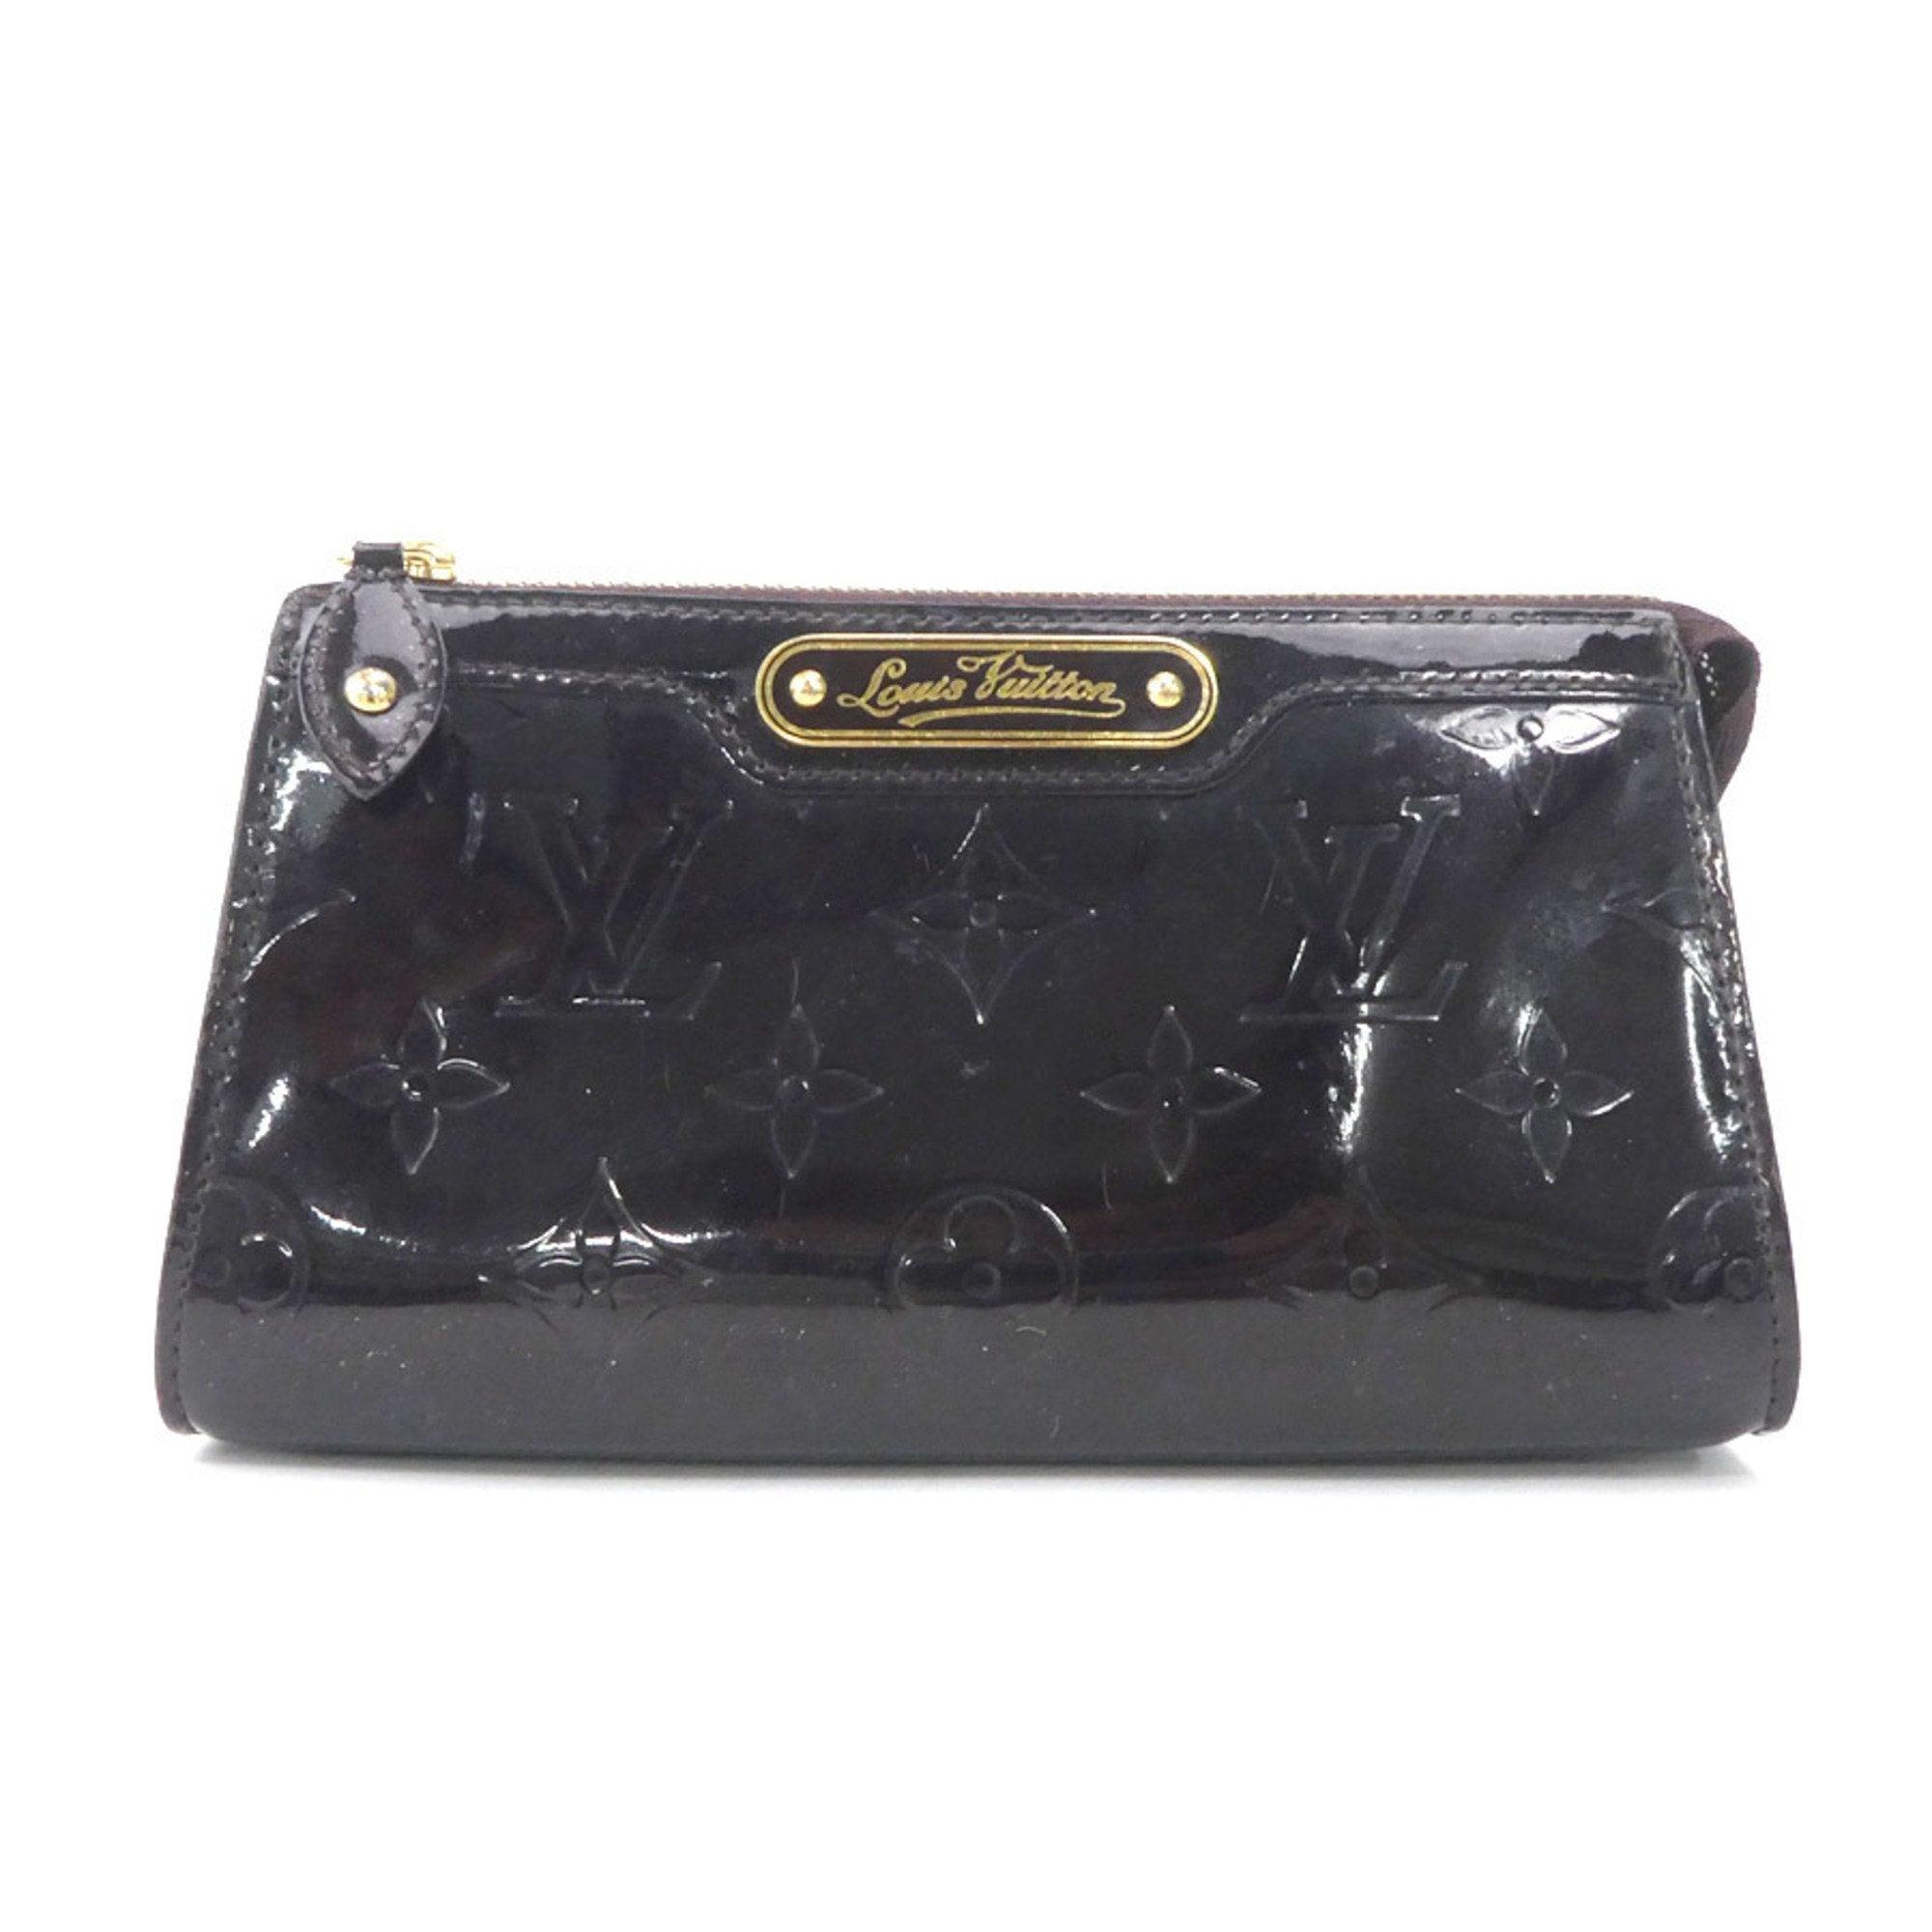 Sobe patent leather clutch bag